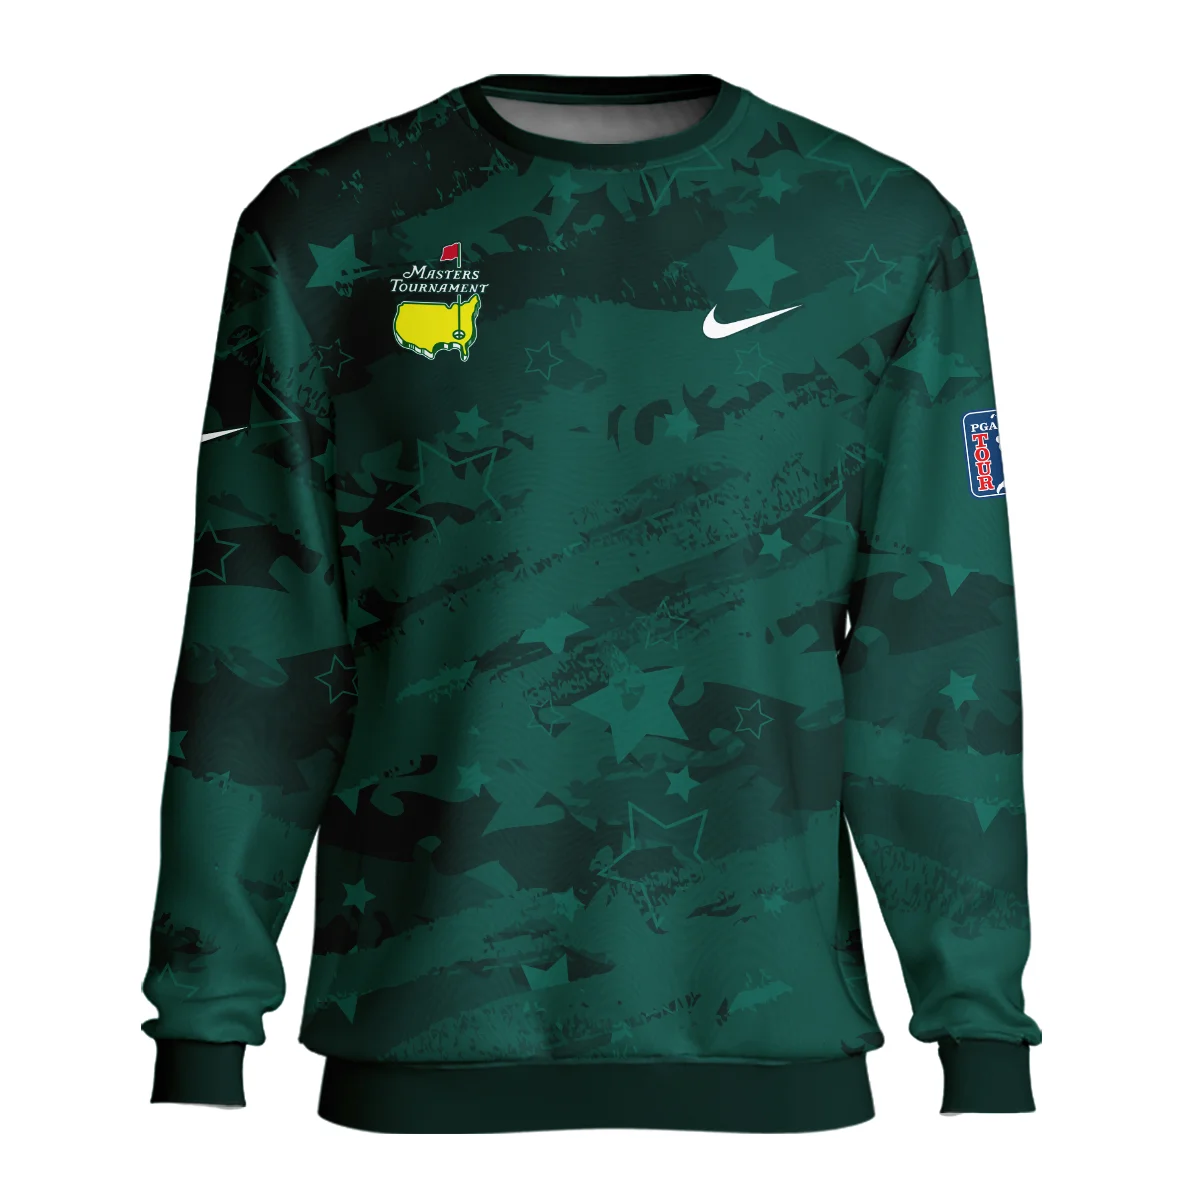 Dark Green Stars Pattern Grunge Background Masters Tournament Nike Unisex Sweatshirt Style Classic Sweatshirt